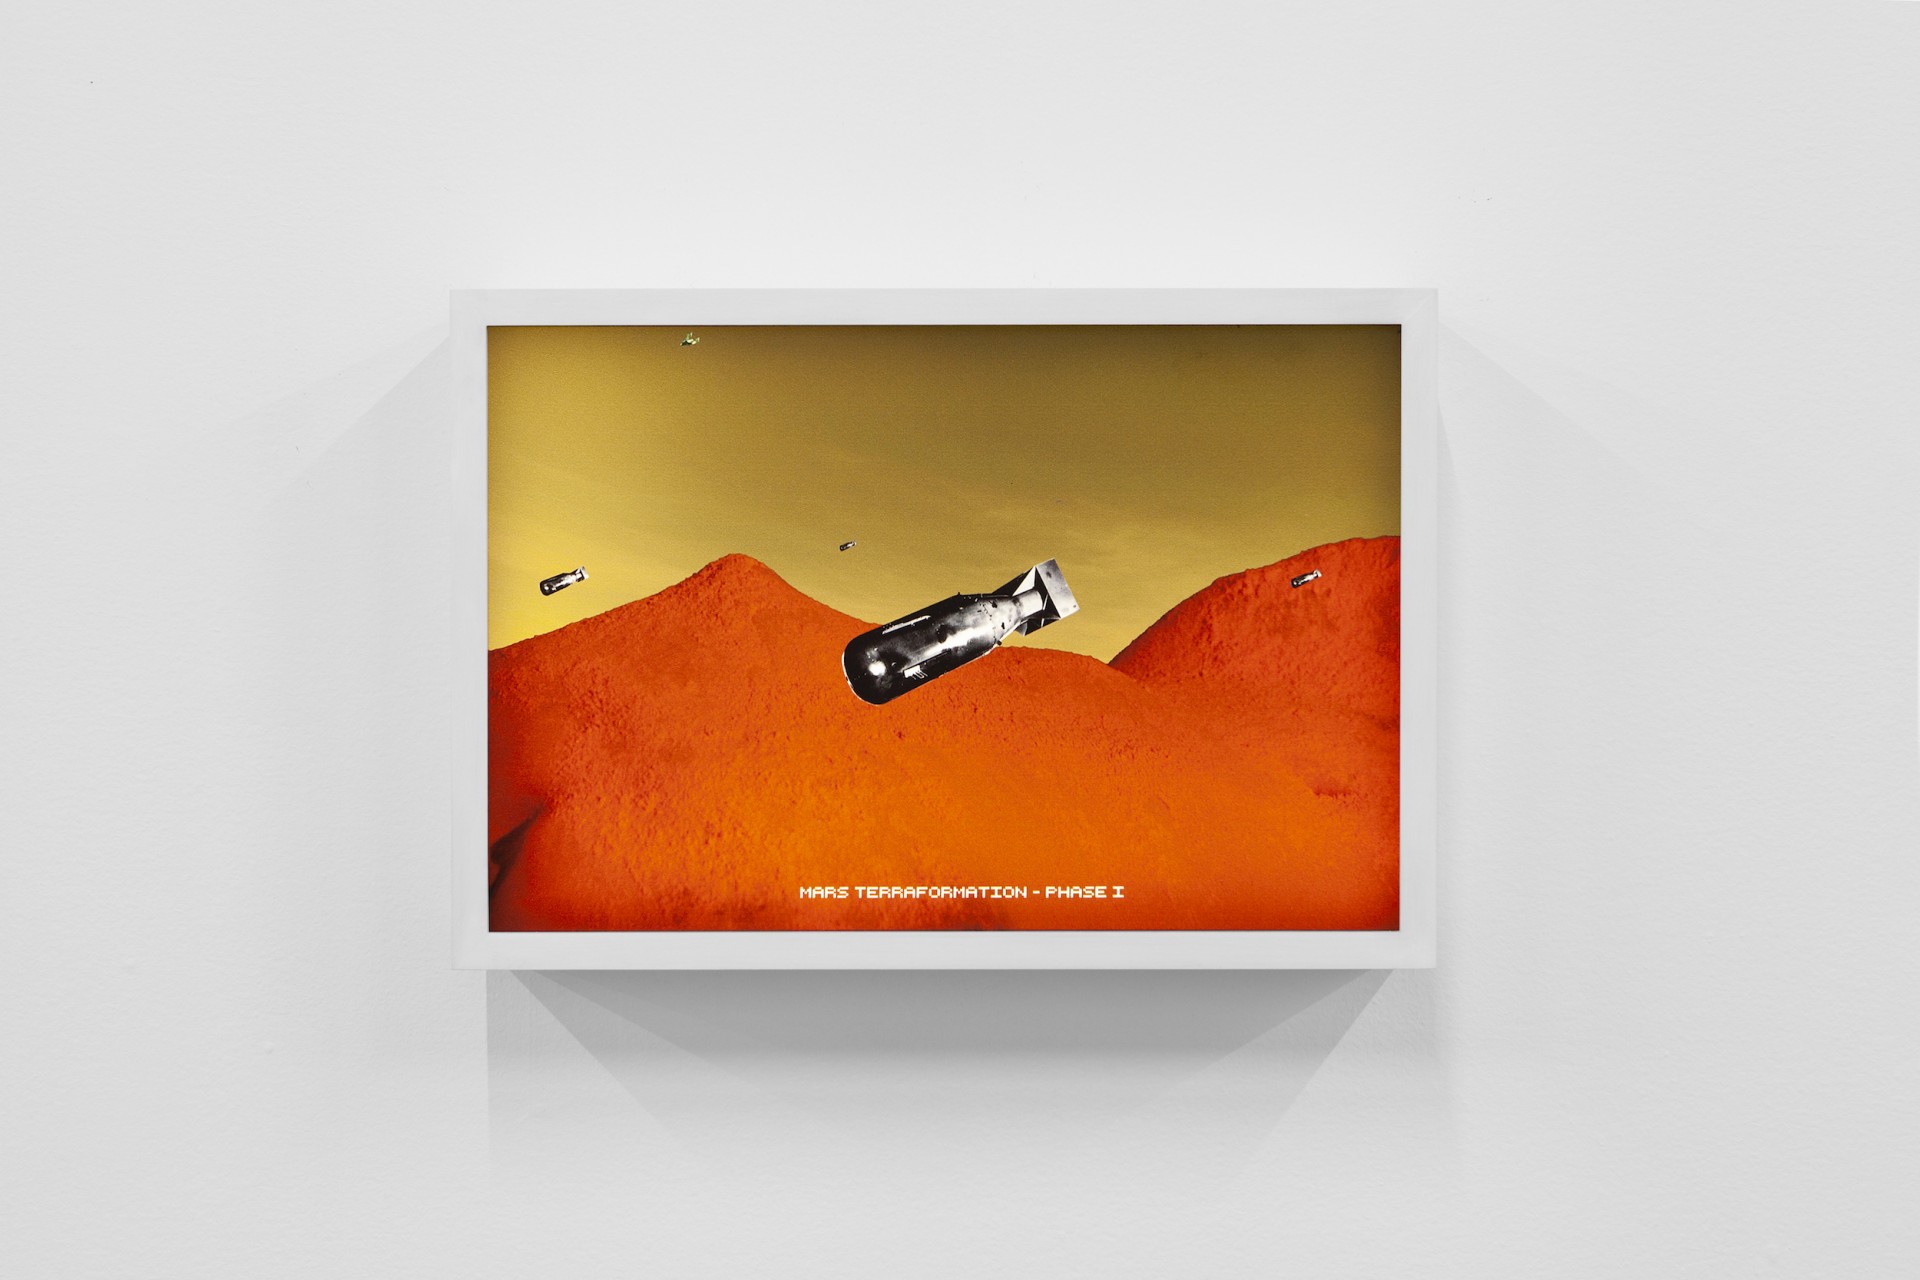 Nash Glynn, *Mars Terraformation - Phase I*, 2019. Diptych, photomontage, light boxes